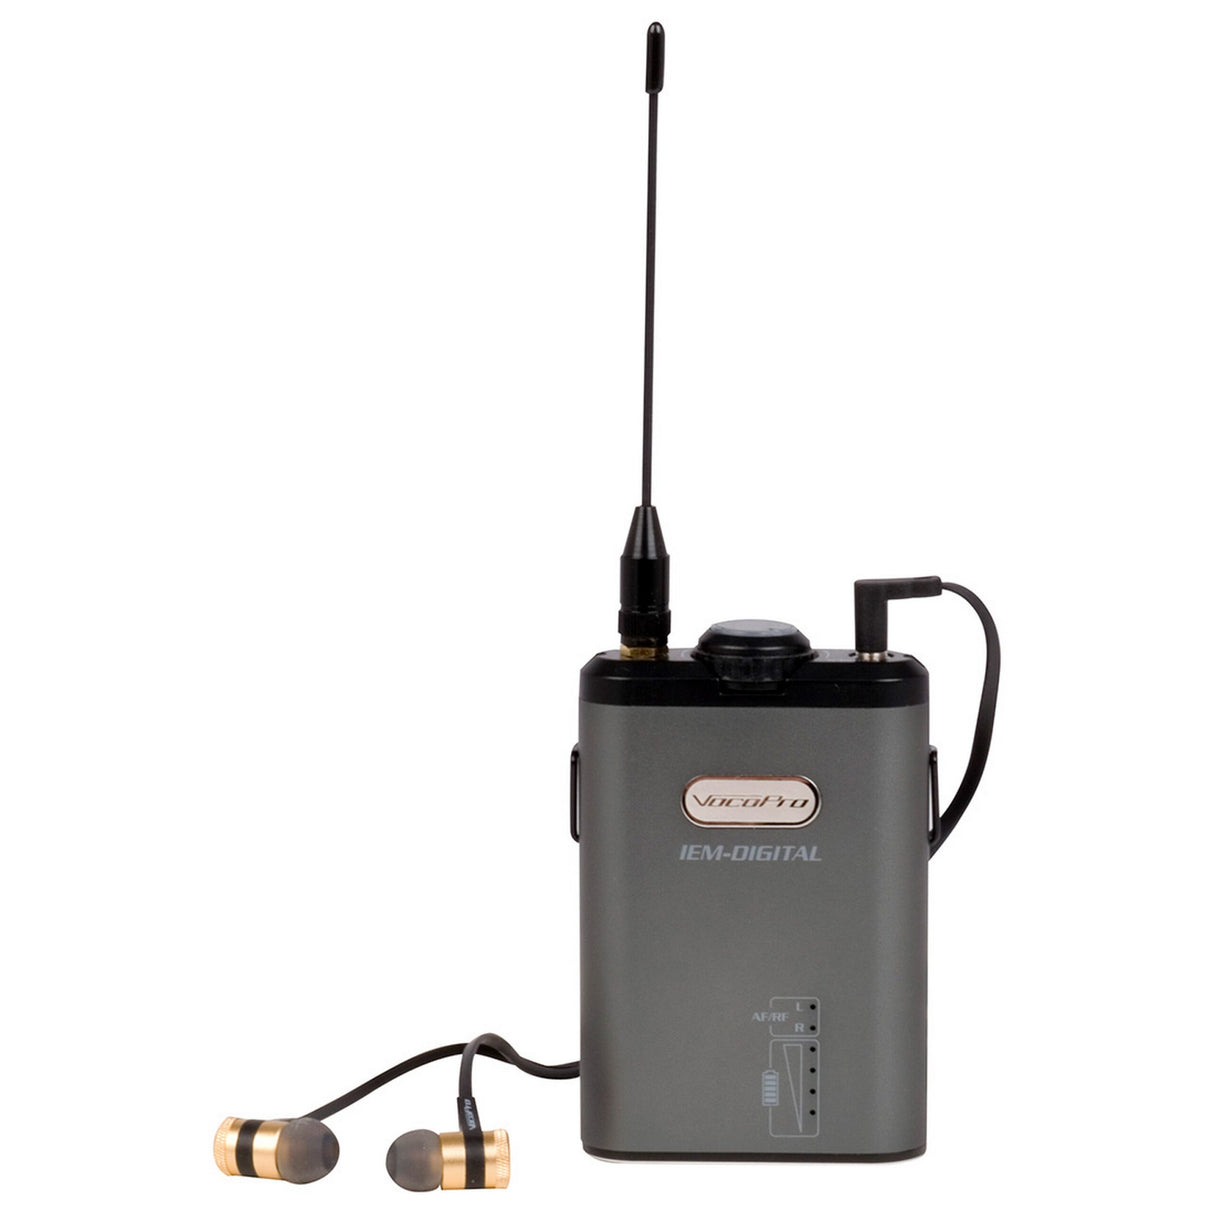 VocoPro IEM-Digital Professional Digital Stereo/True Dual Mono In-Ear Monitor